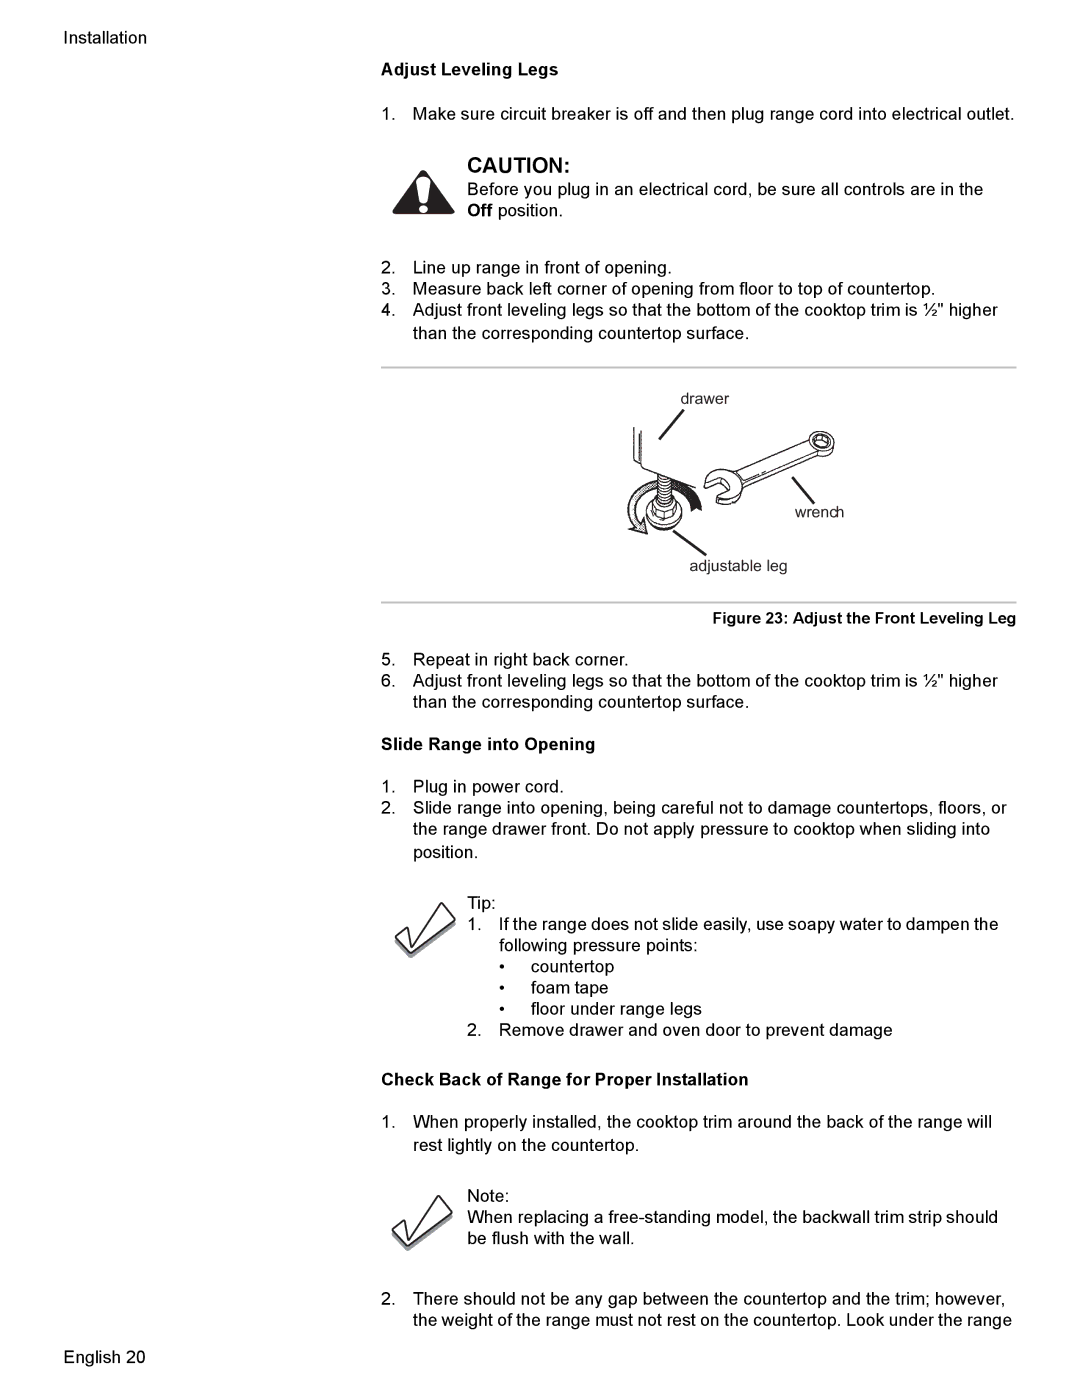 Bosch Appliances Dual-Fuel Slide-In Range installation instructions Adjust Leveling Legs 